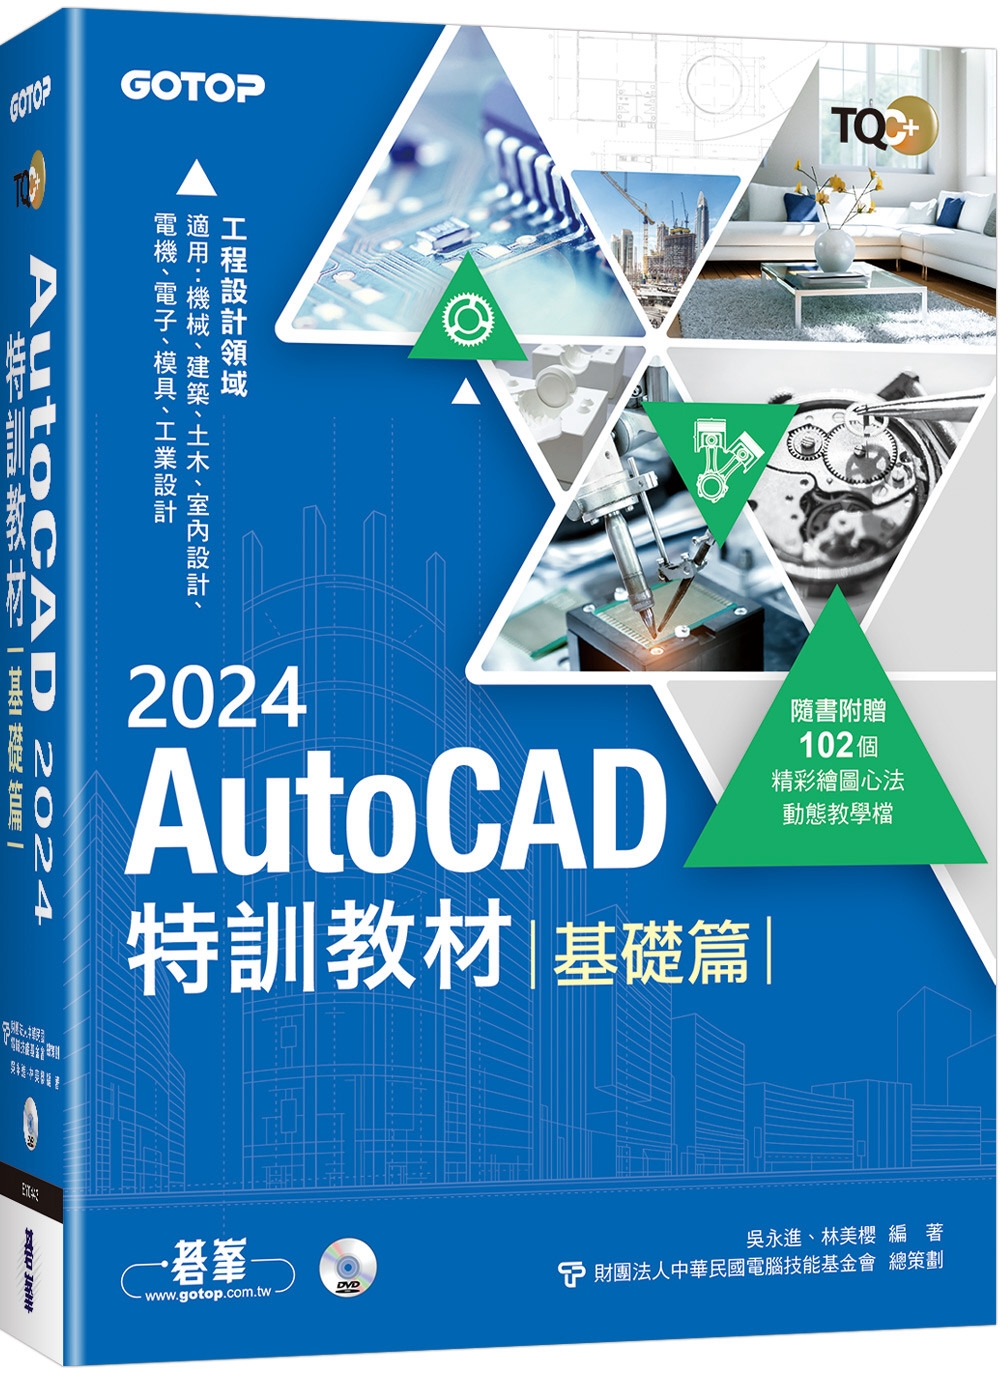 TQC+ AutoCAD 2024特訓教材-基礎篇(隨書附贈...